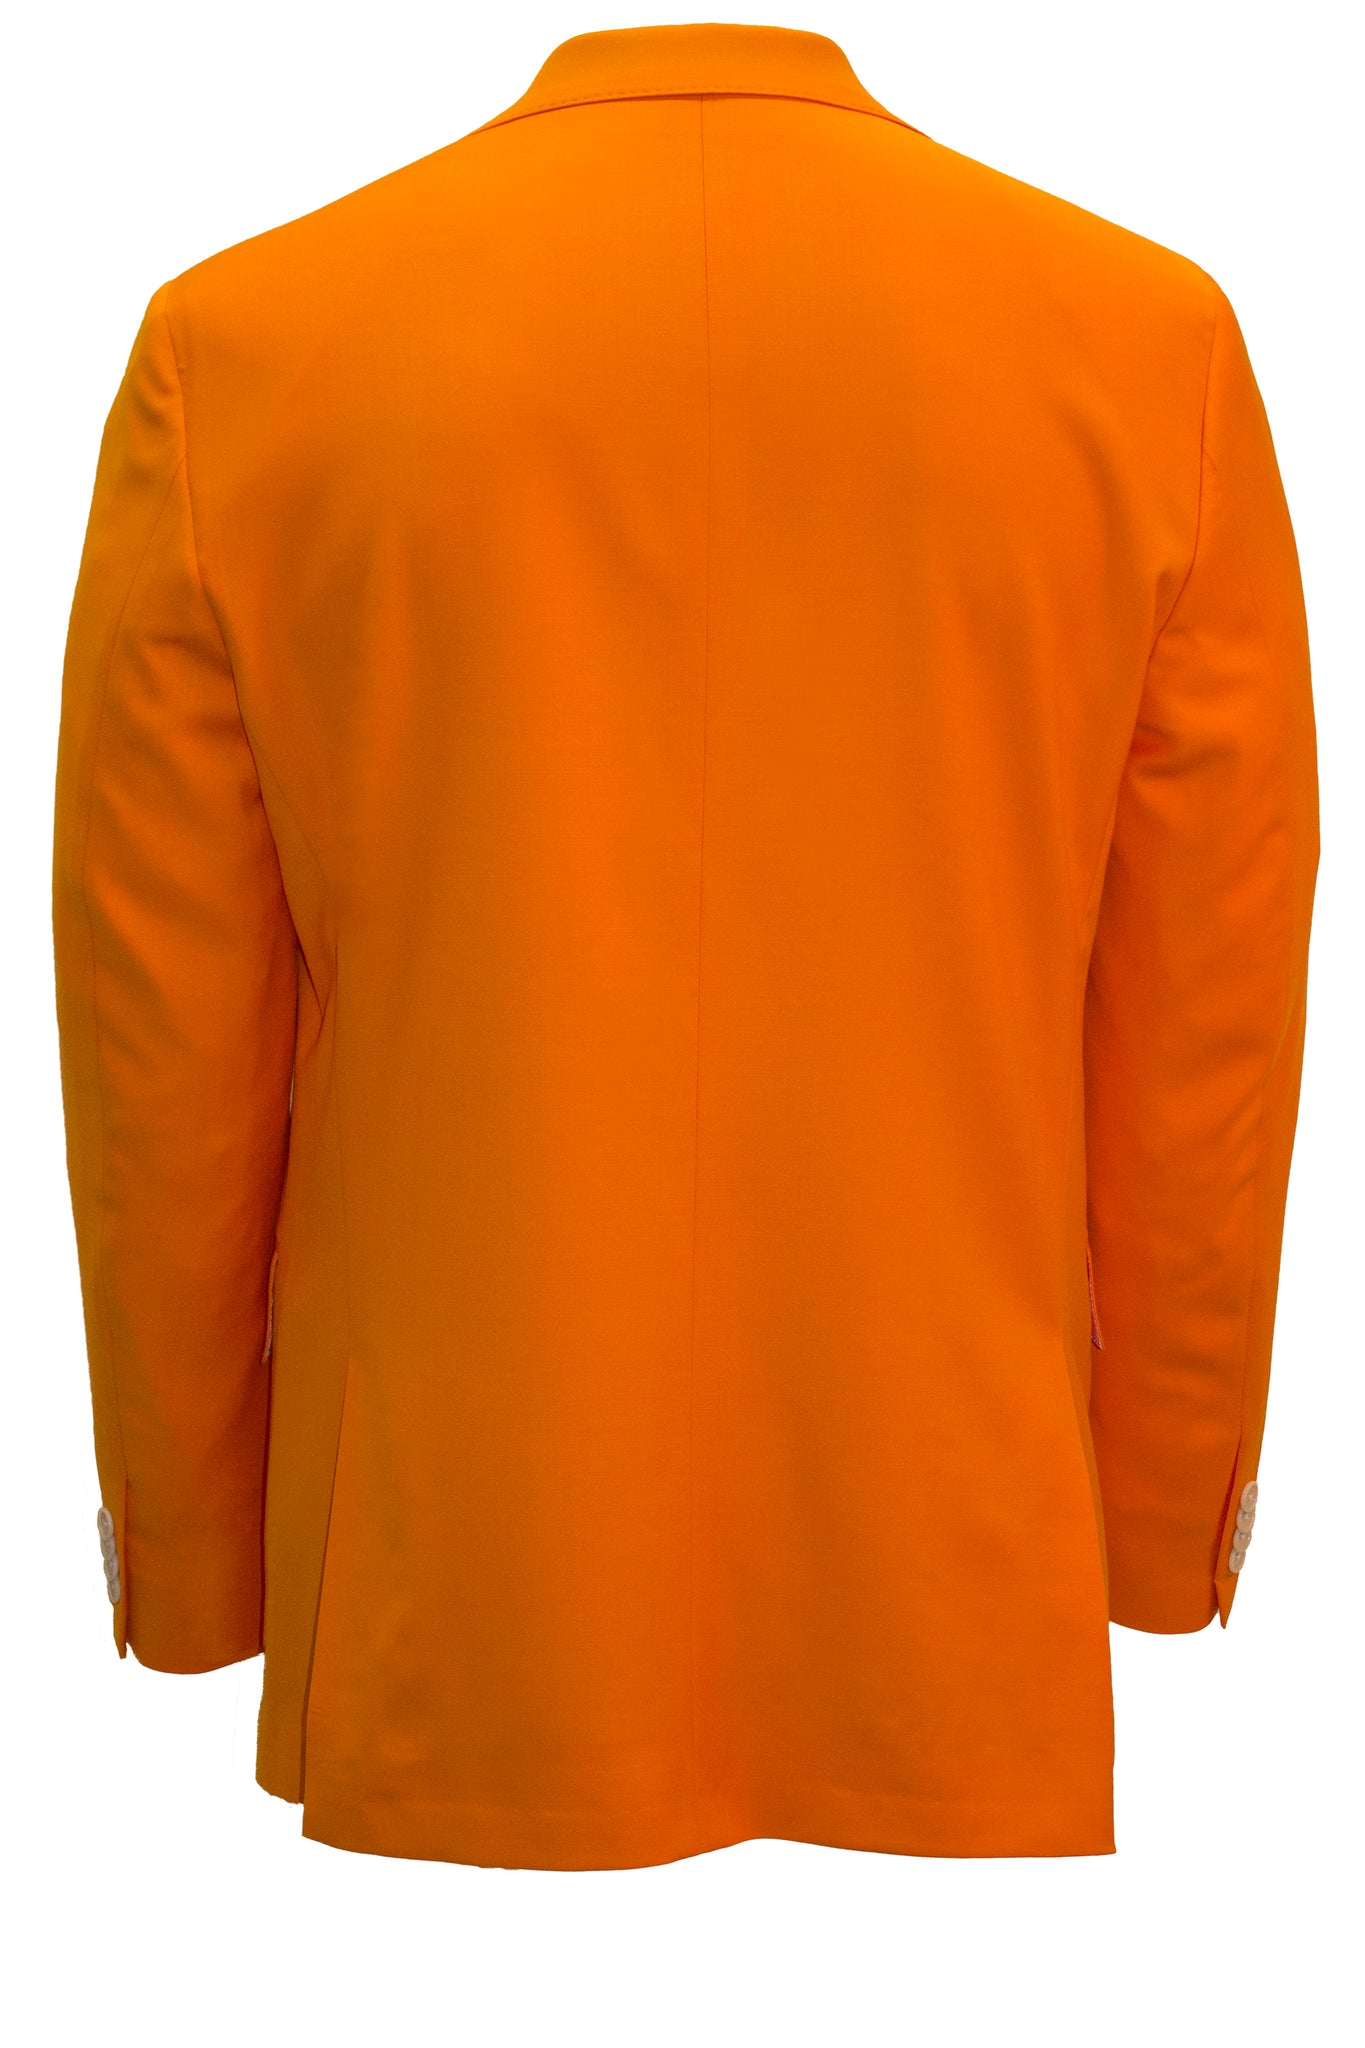 Men's Modern Fit Volunteer Orange Wool Blazer -  Hardwick.com